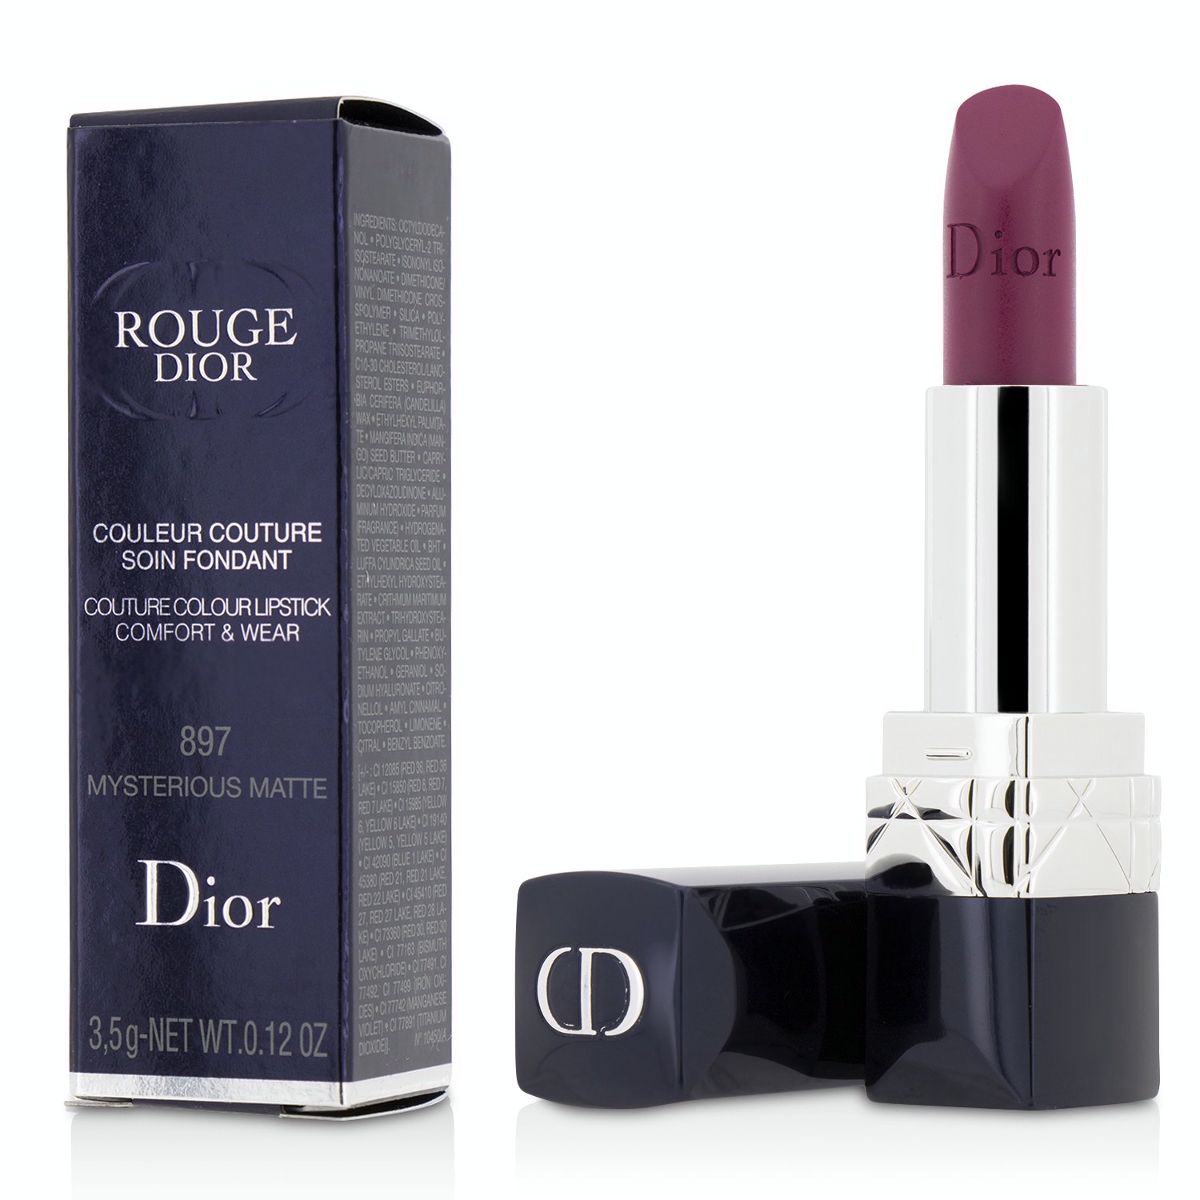 Rouge Dior Couture Colour Comfort  Wear Matte Lipstick - # 897 Mysterious Matte Christian Dior Image